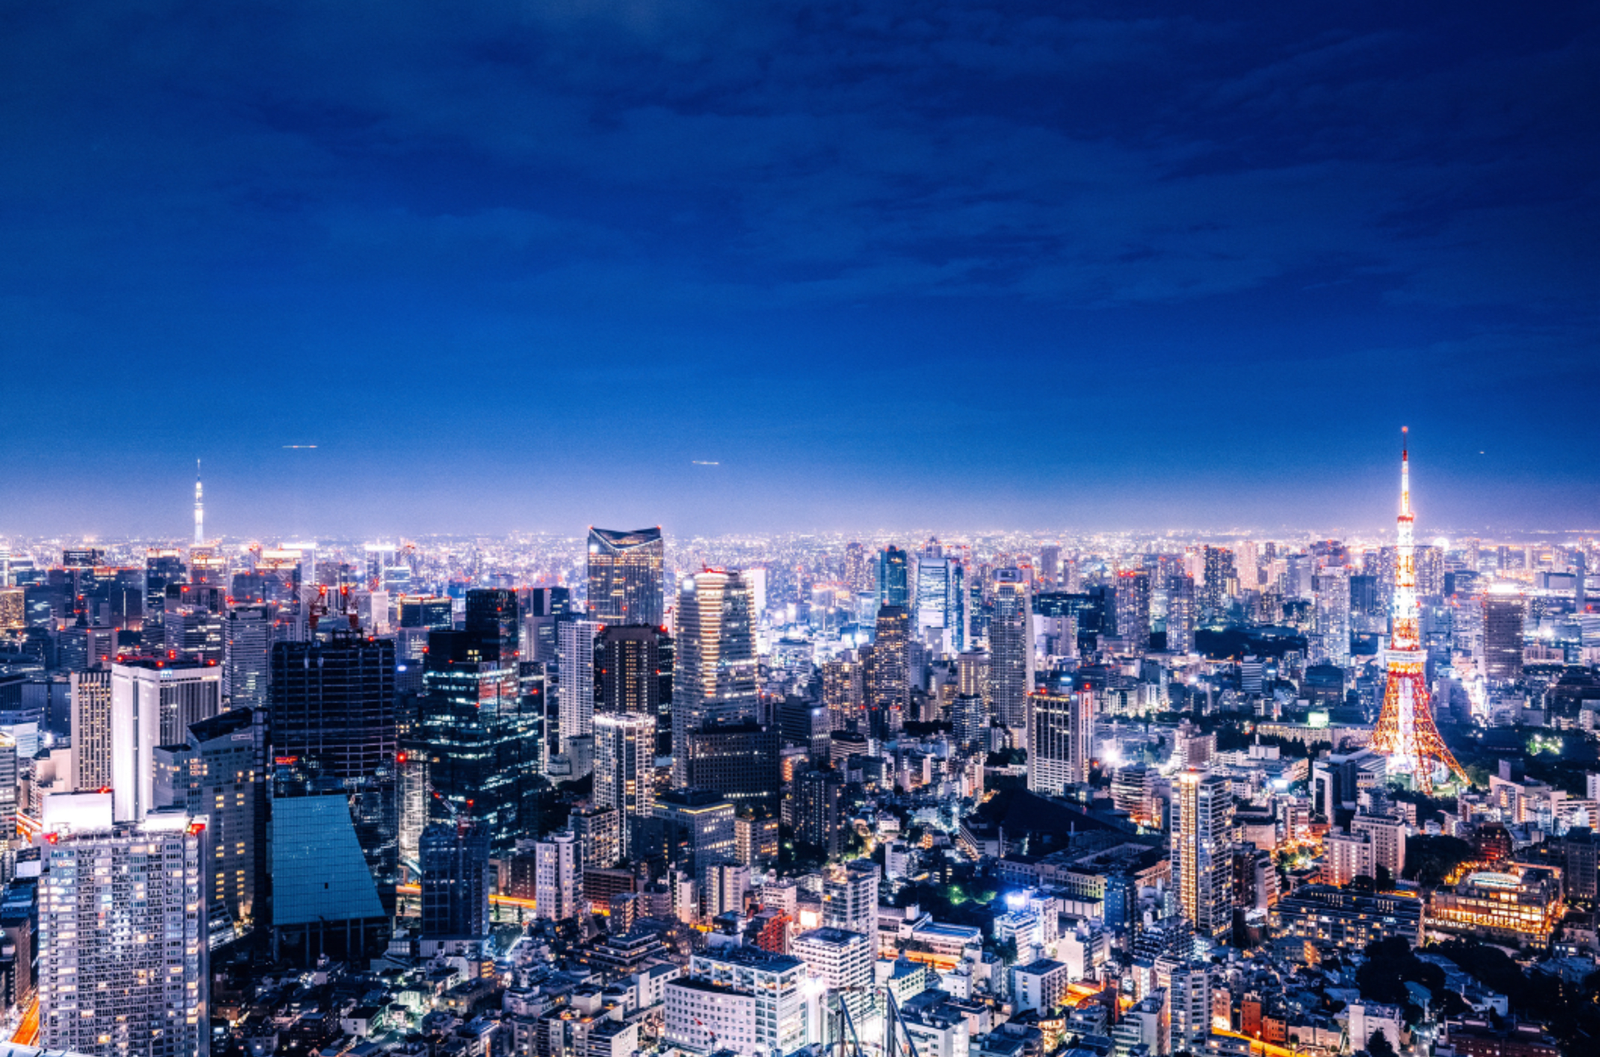 City skyline over Tokyo